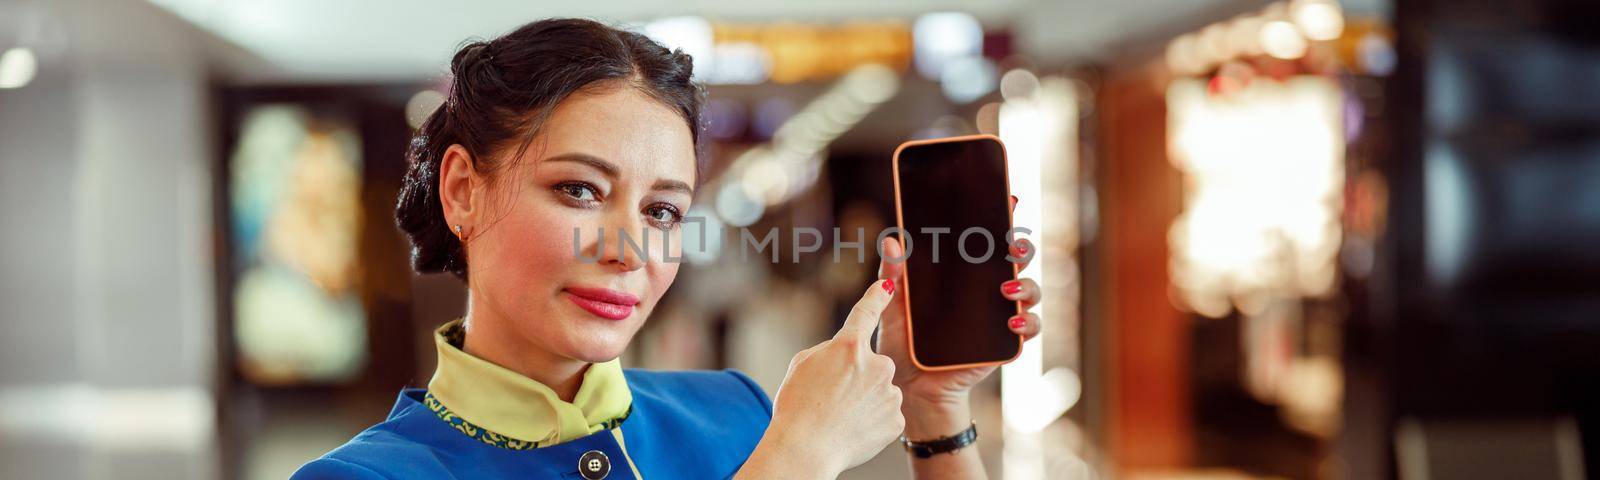 Female flight attendant pointing at smartphone at airport by Yaroslav_astakhov